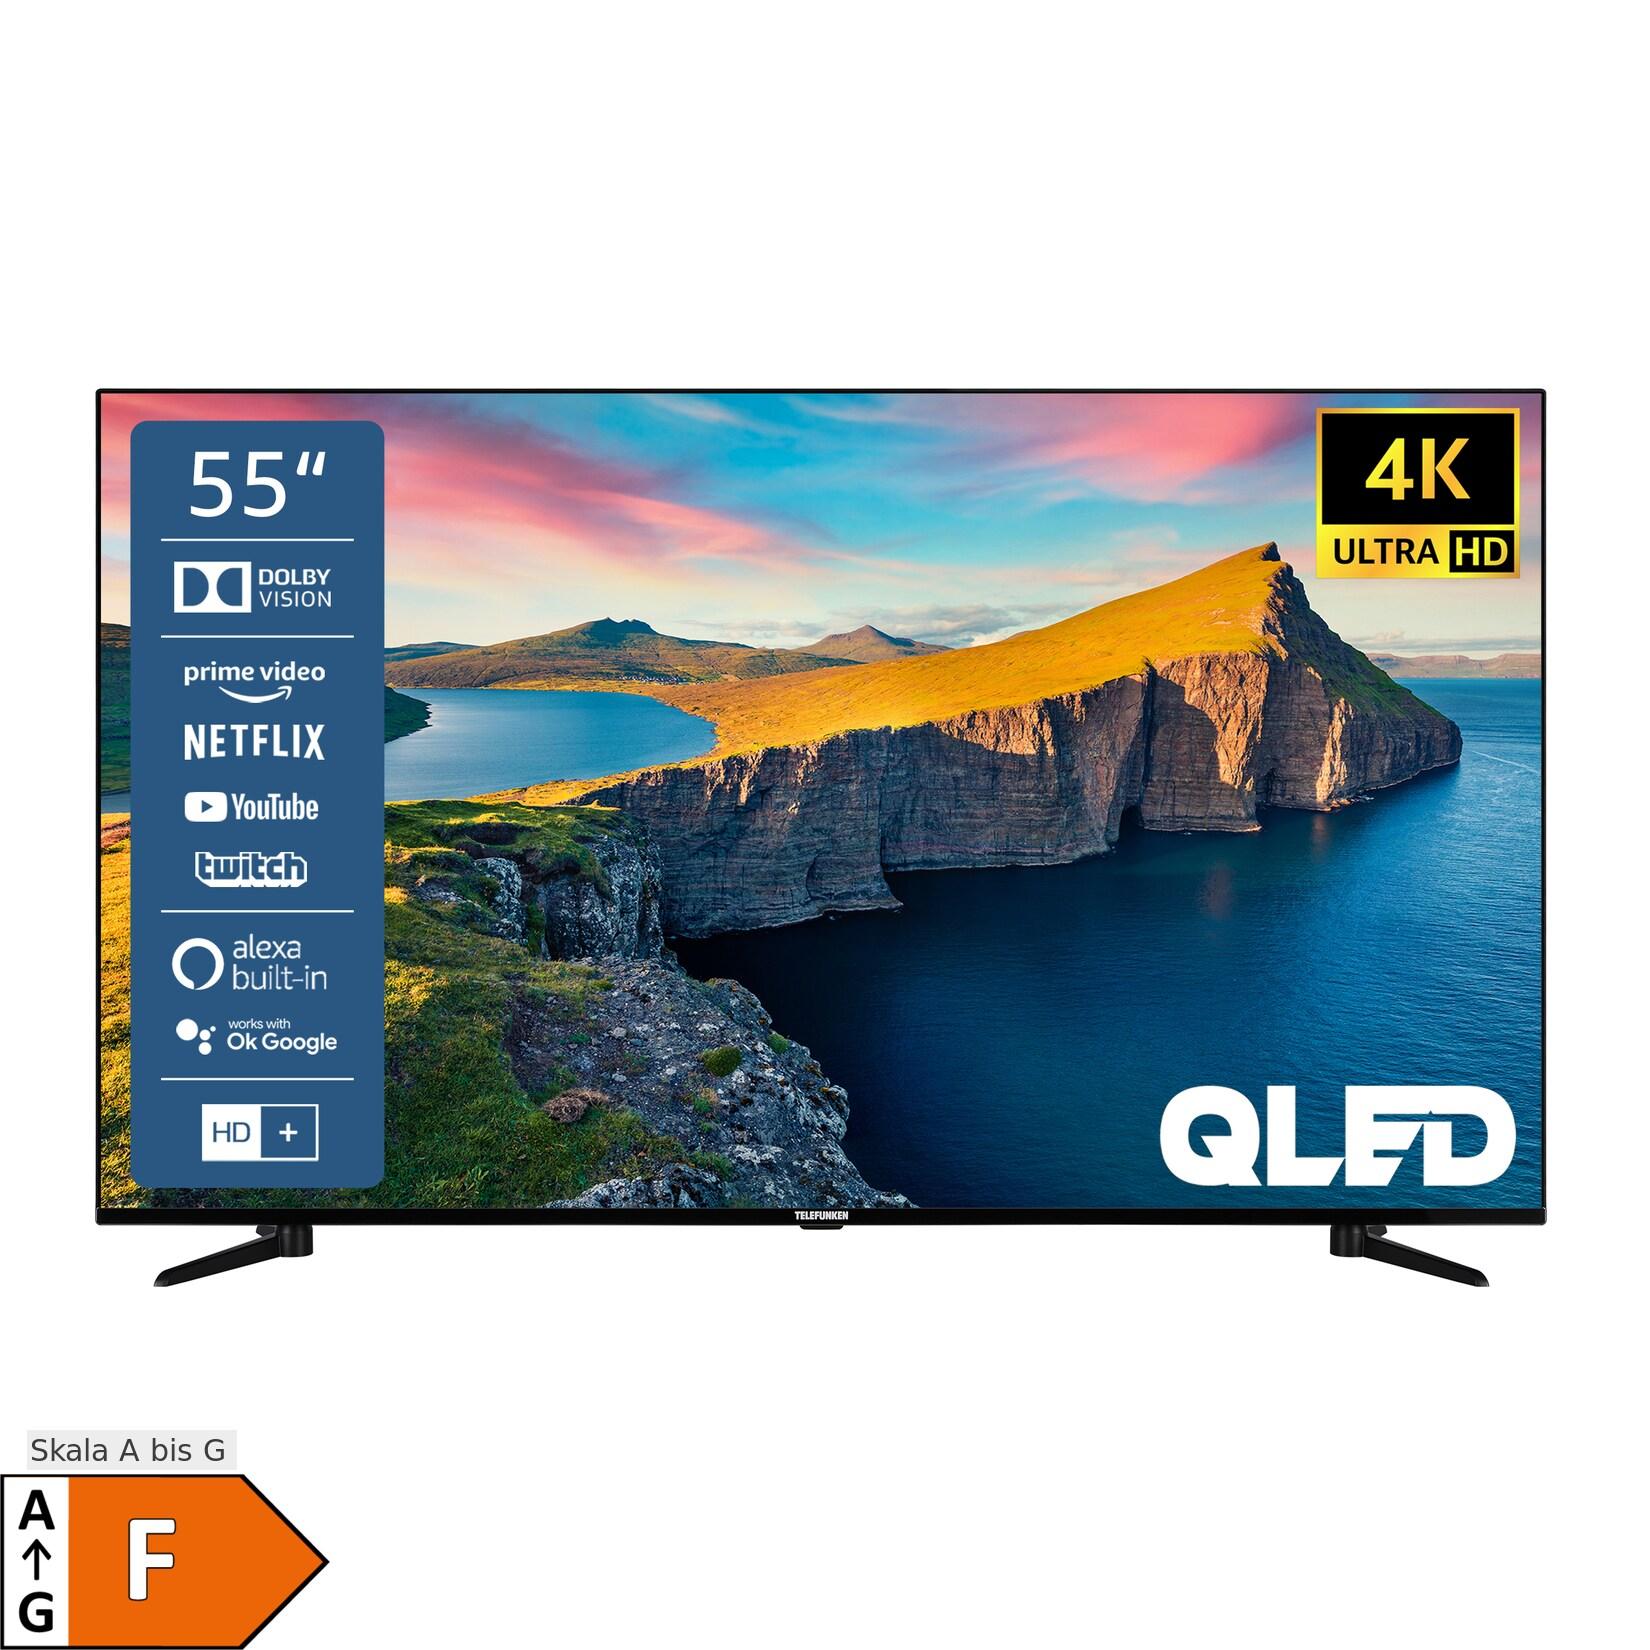 Telefunken QU55K800 55 Zoll QLED Fernseher, Smart TV, 4K UHD, Alexa Built-in, inkl. 6 Monate gratis HD+